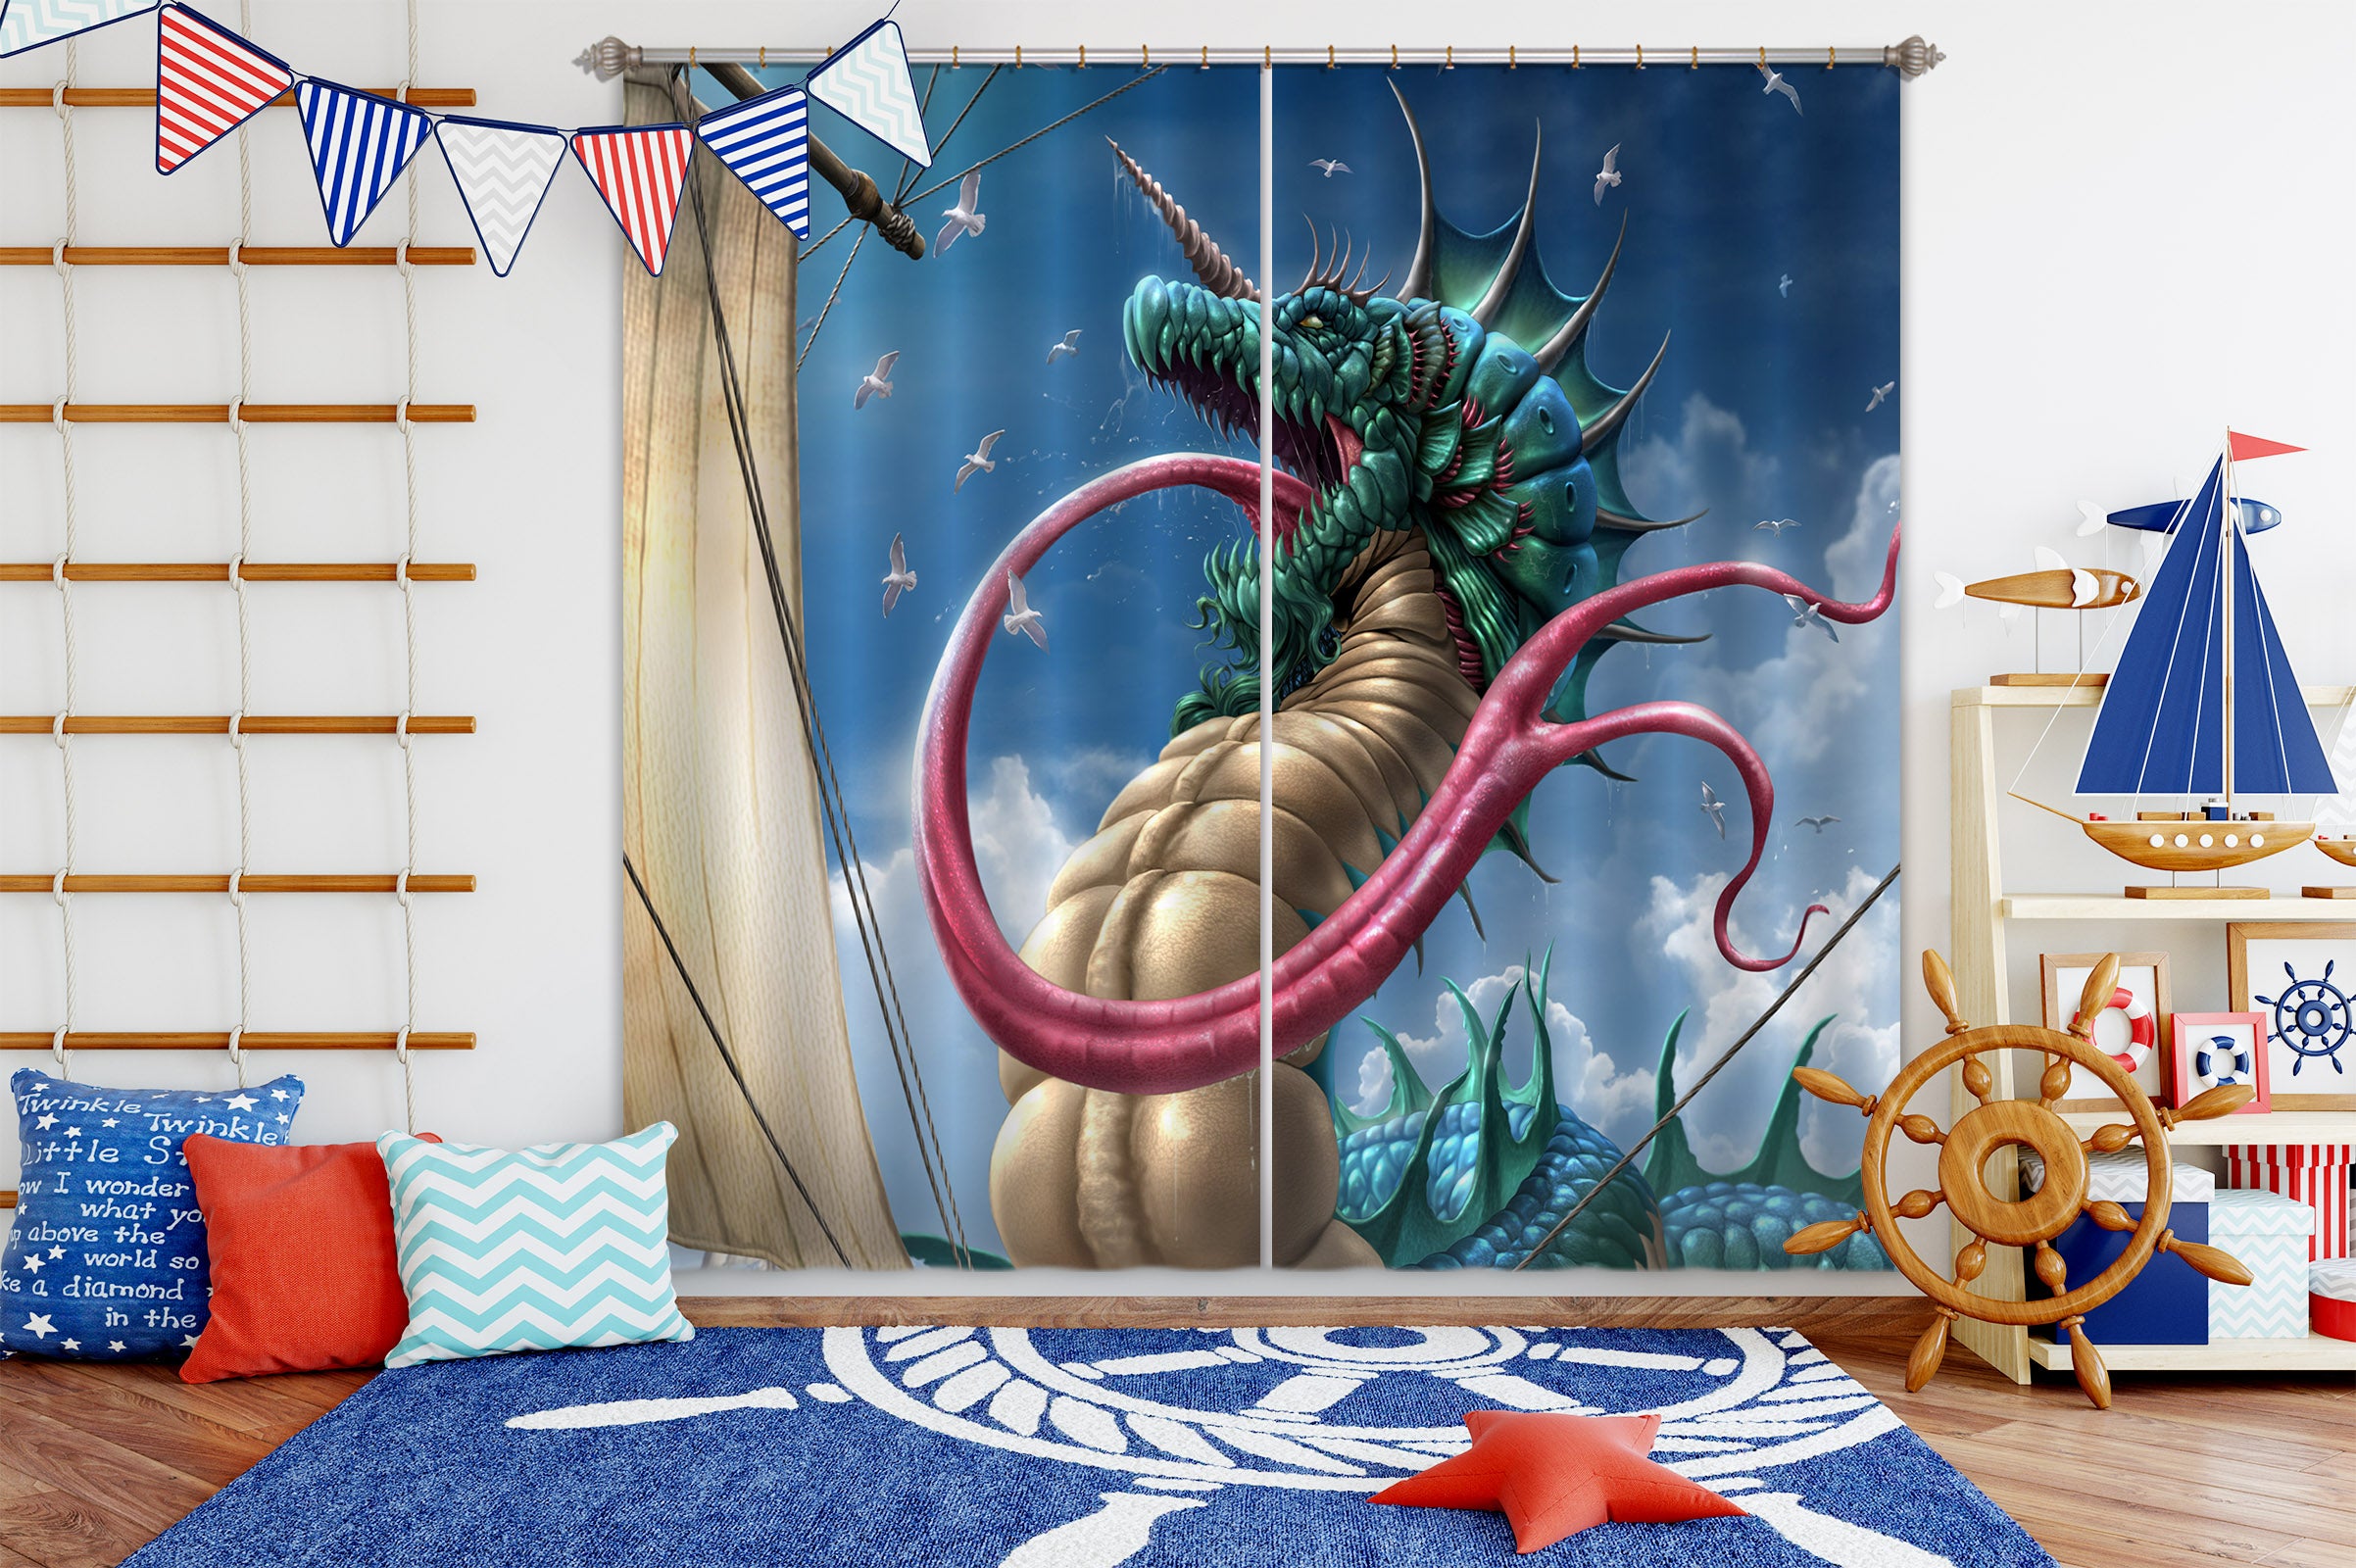 3D Long Tongue Dragon 5075 Tom Wood Curtain Curtains Drapes